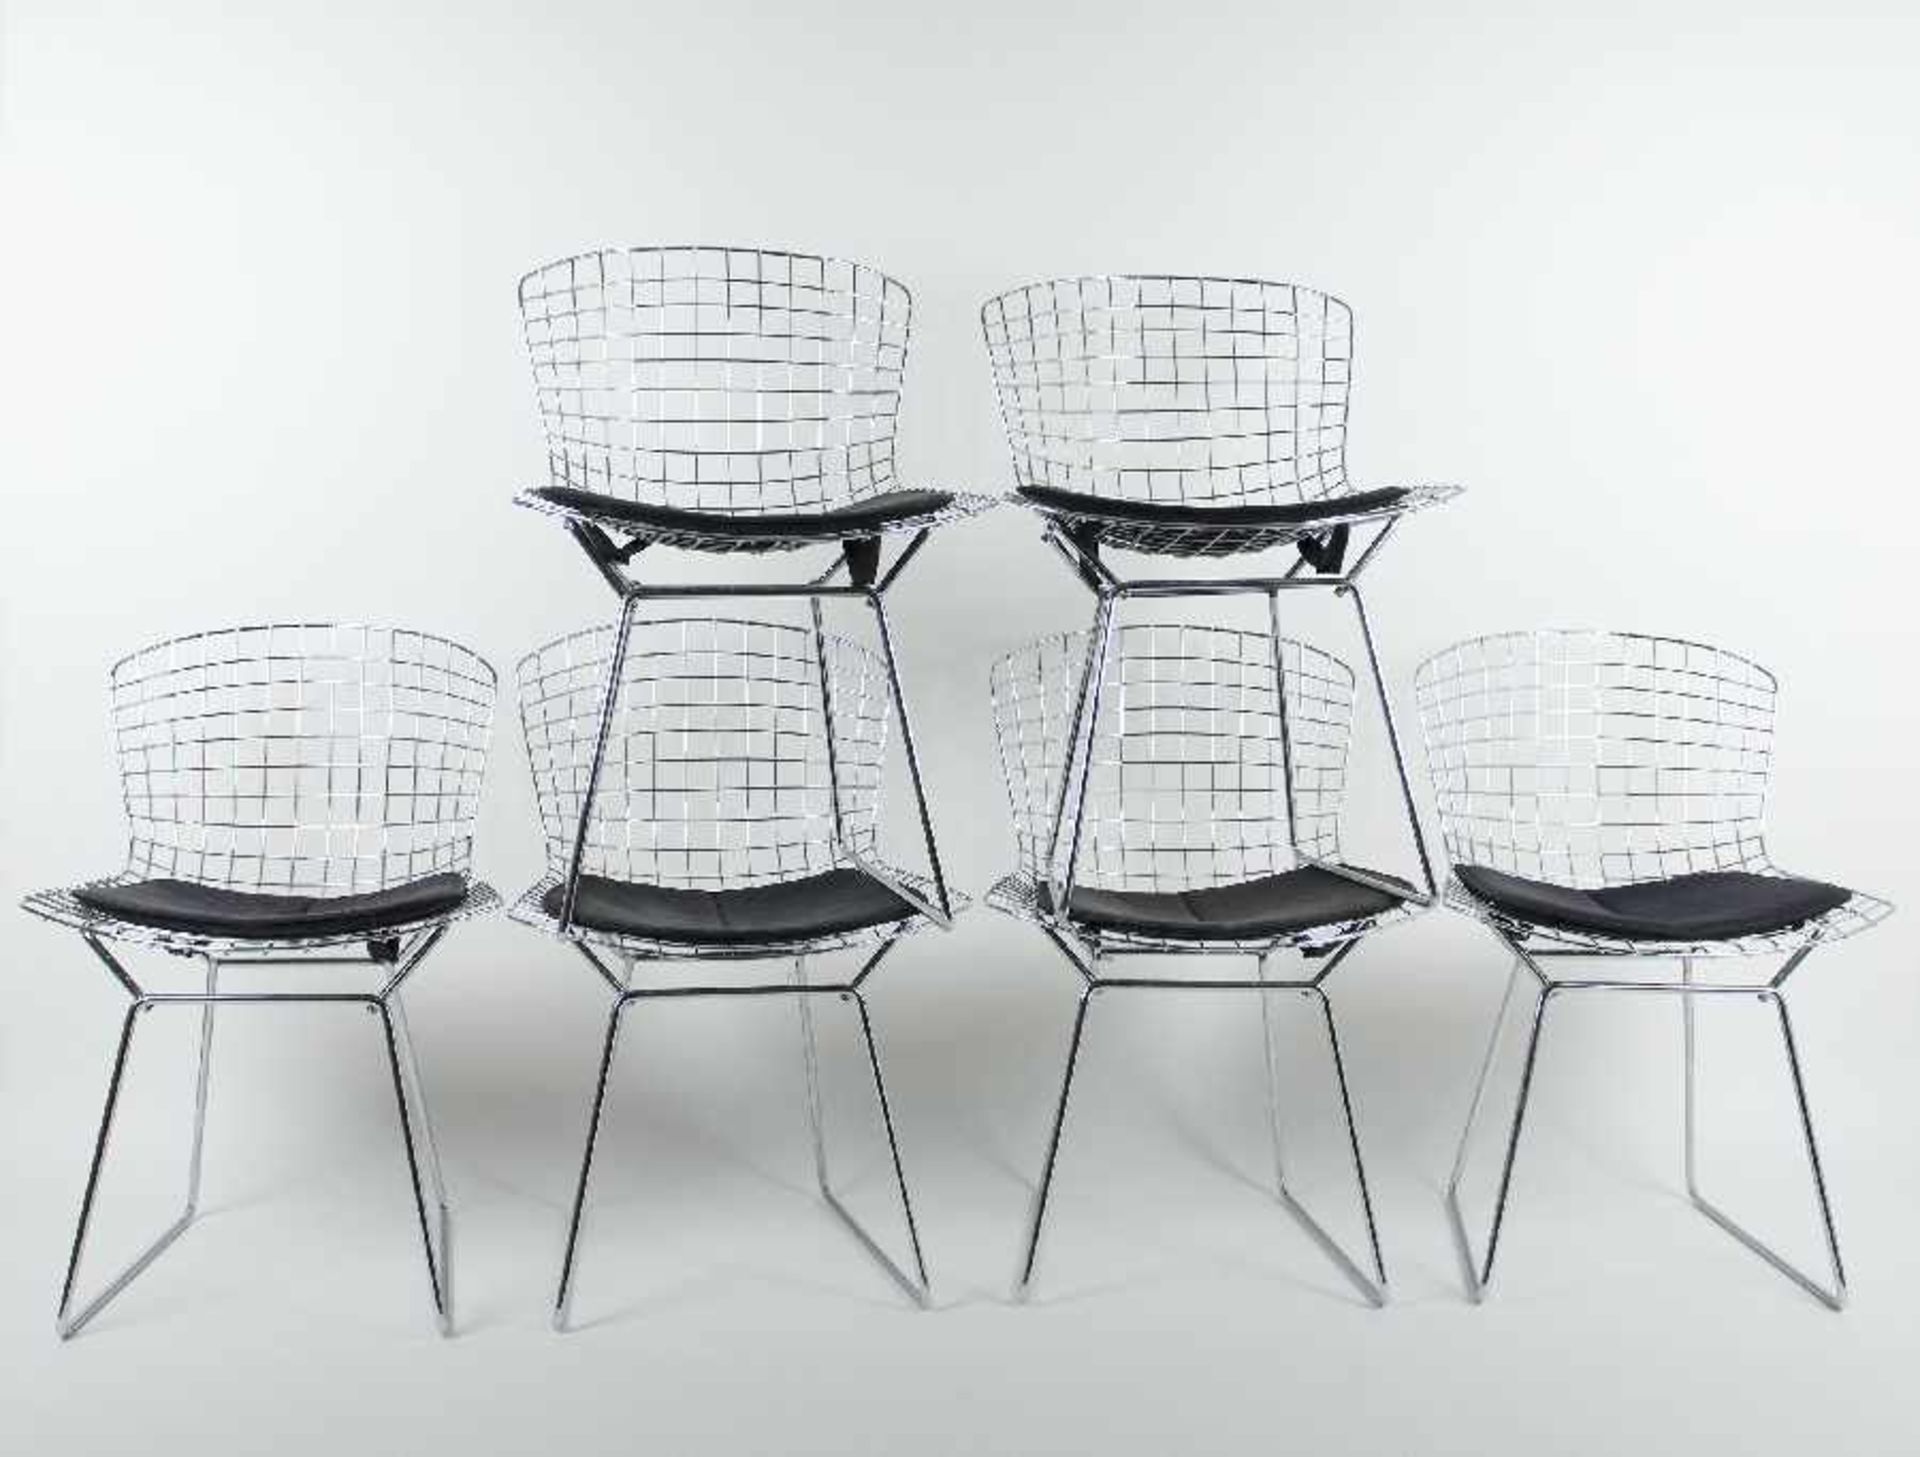 Harry Bertoia1915 San Lorenzo/Italien - 1978 Pennsylvania6 Swing chairsStainless steel, chrome-